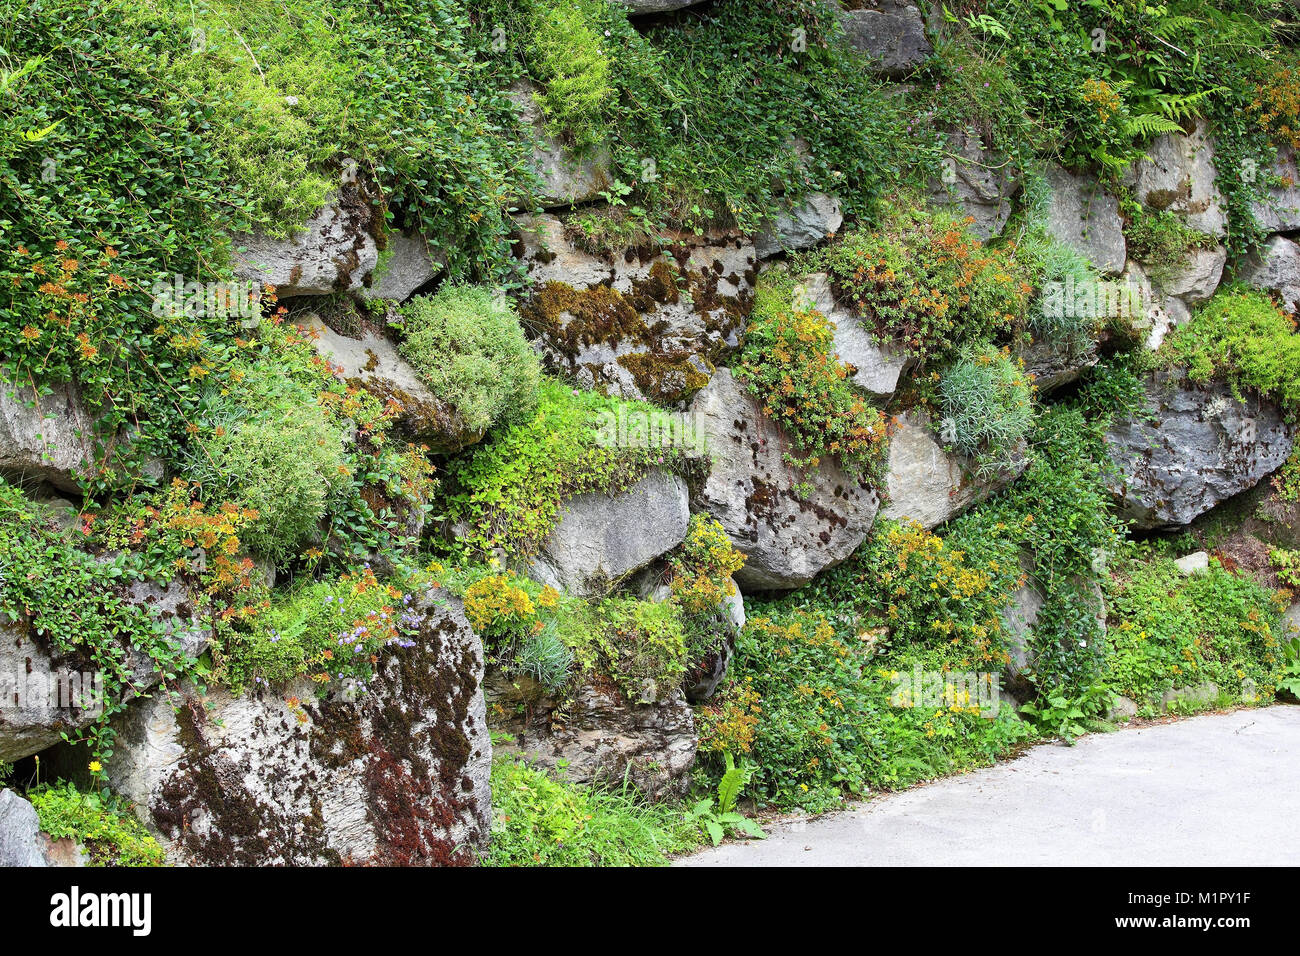 Covered dry stone wall or dry wall made of large stone blocks0en, Lake Constance, Styria, Austria, Bewachsene Trockensteinmauer oder Trockenmauer aus  Stock Photo